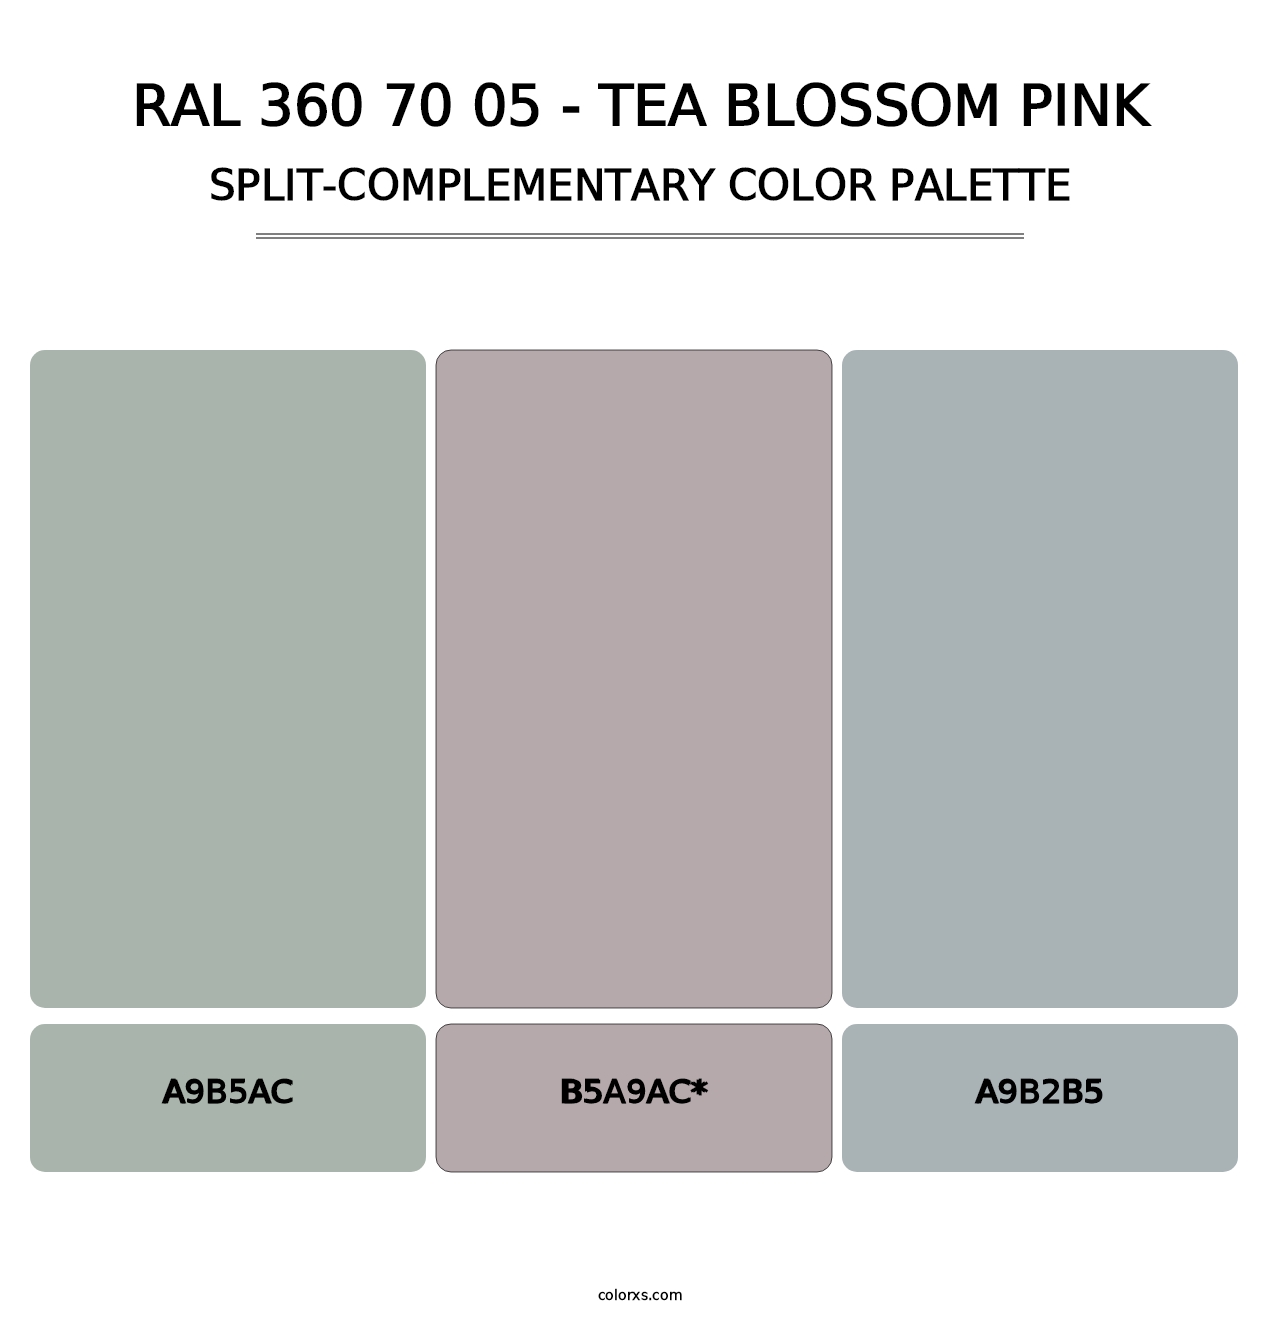 RAL 360 70 05 - Tea Blossom Pink - Split-Complementary Color Palette